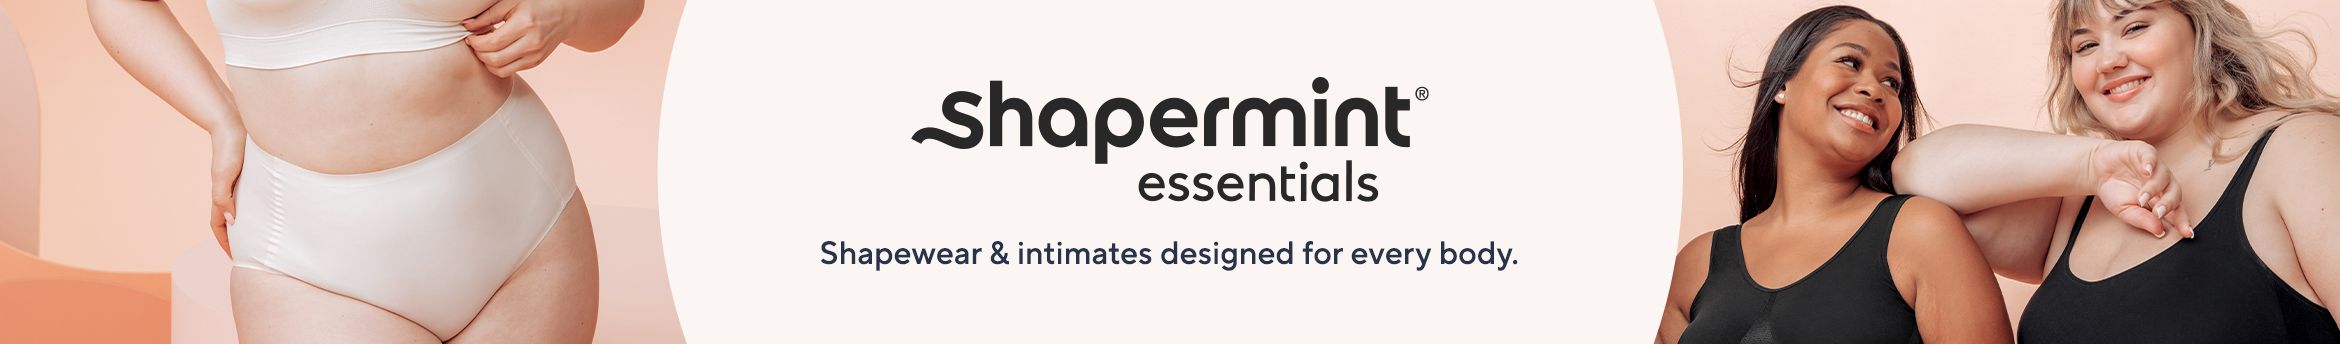 Shapermint, Intimates & Sleepwear, Nwt Empetua High Waisted Shaper Panty